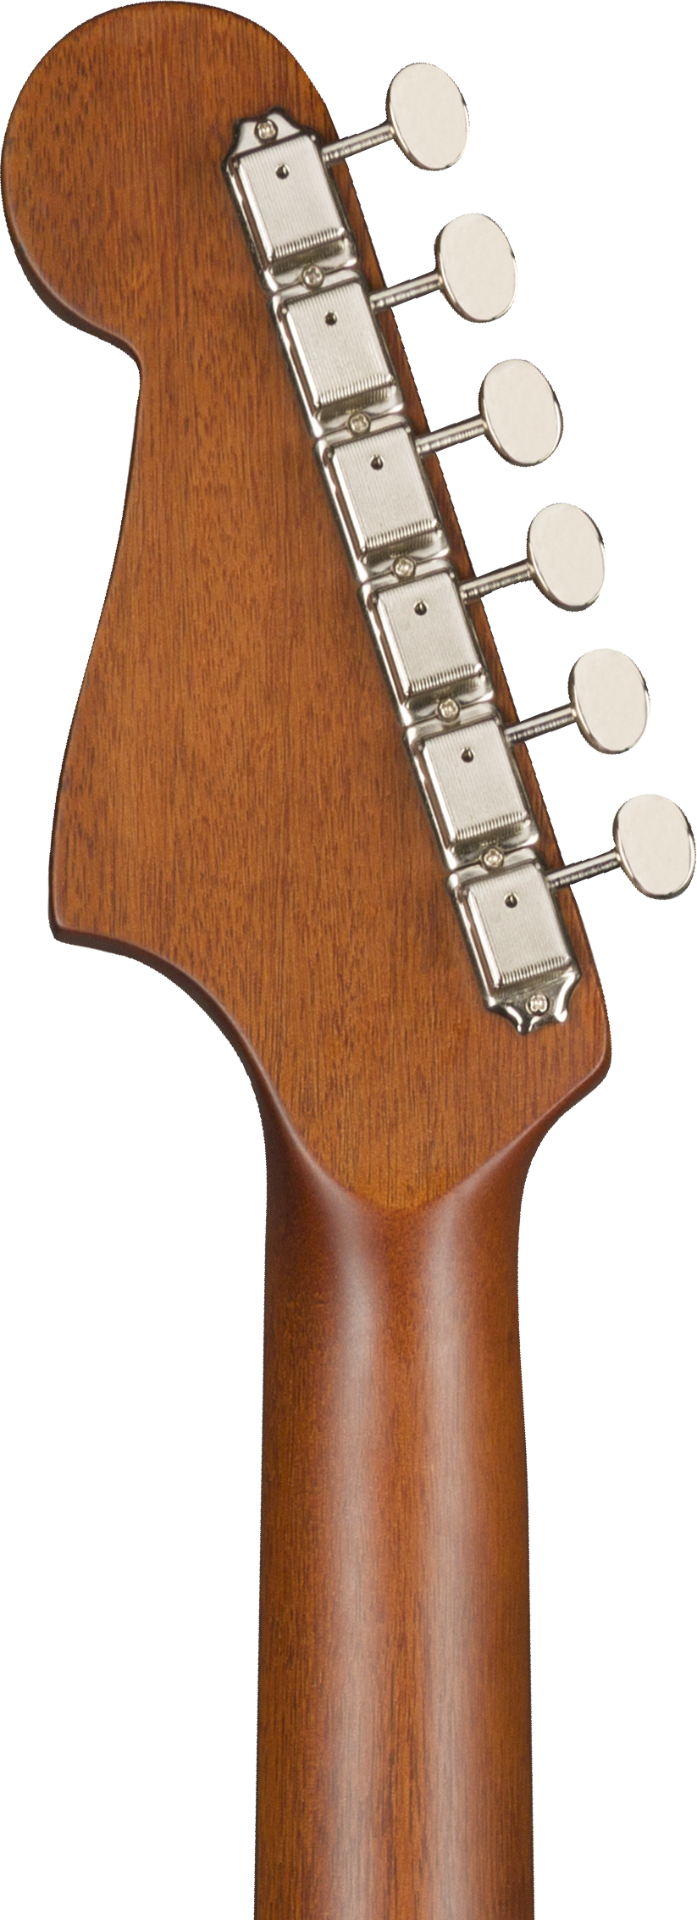 Fender Newporter Player Acoustic-Electric Guitar, Natural